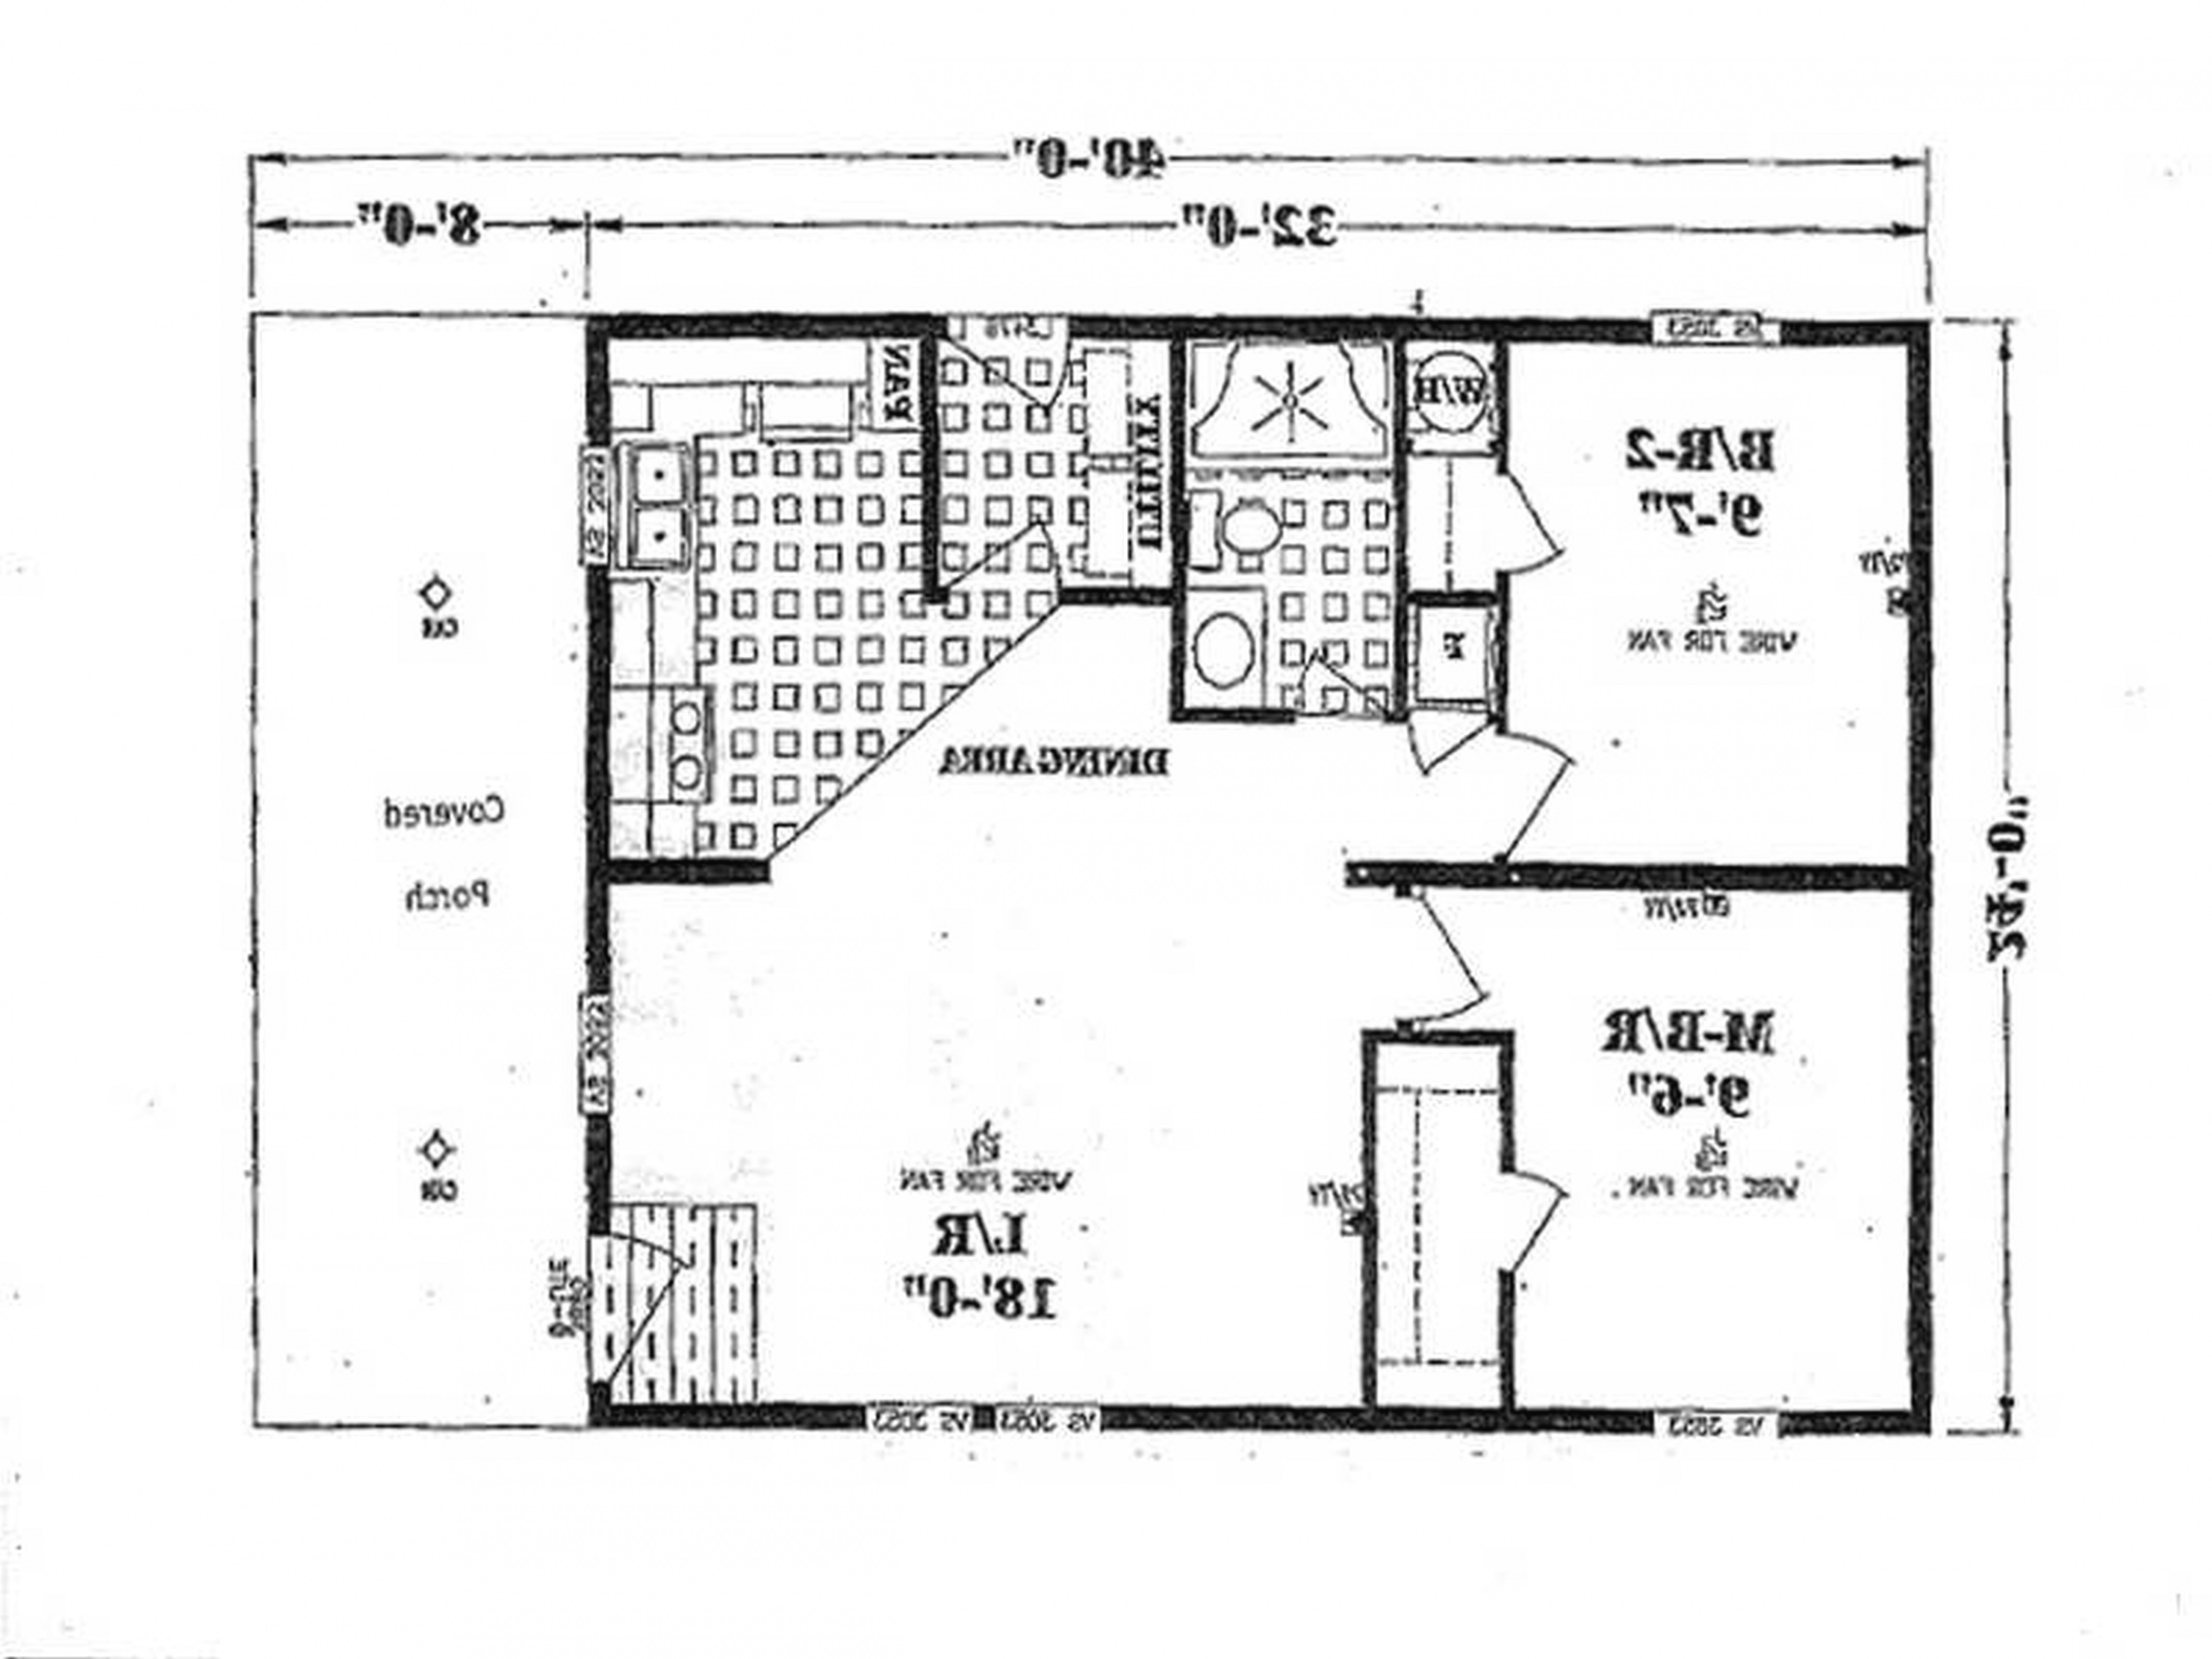 Portlandbathrepair 1900 Sq Ft Floor Plans Inspirational 1900 Sqft 4  Bedroom House Plans Elegant 48 Inspirational 1900